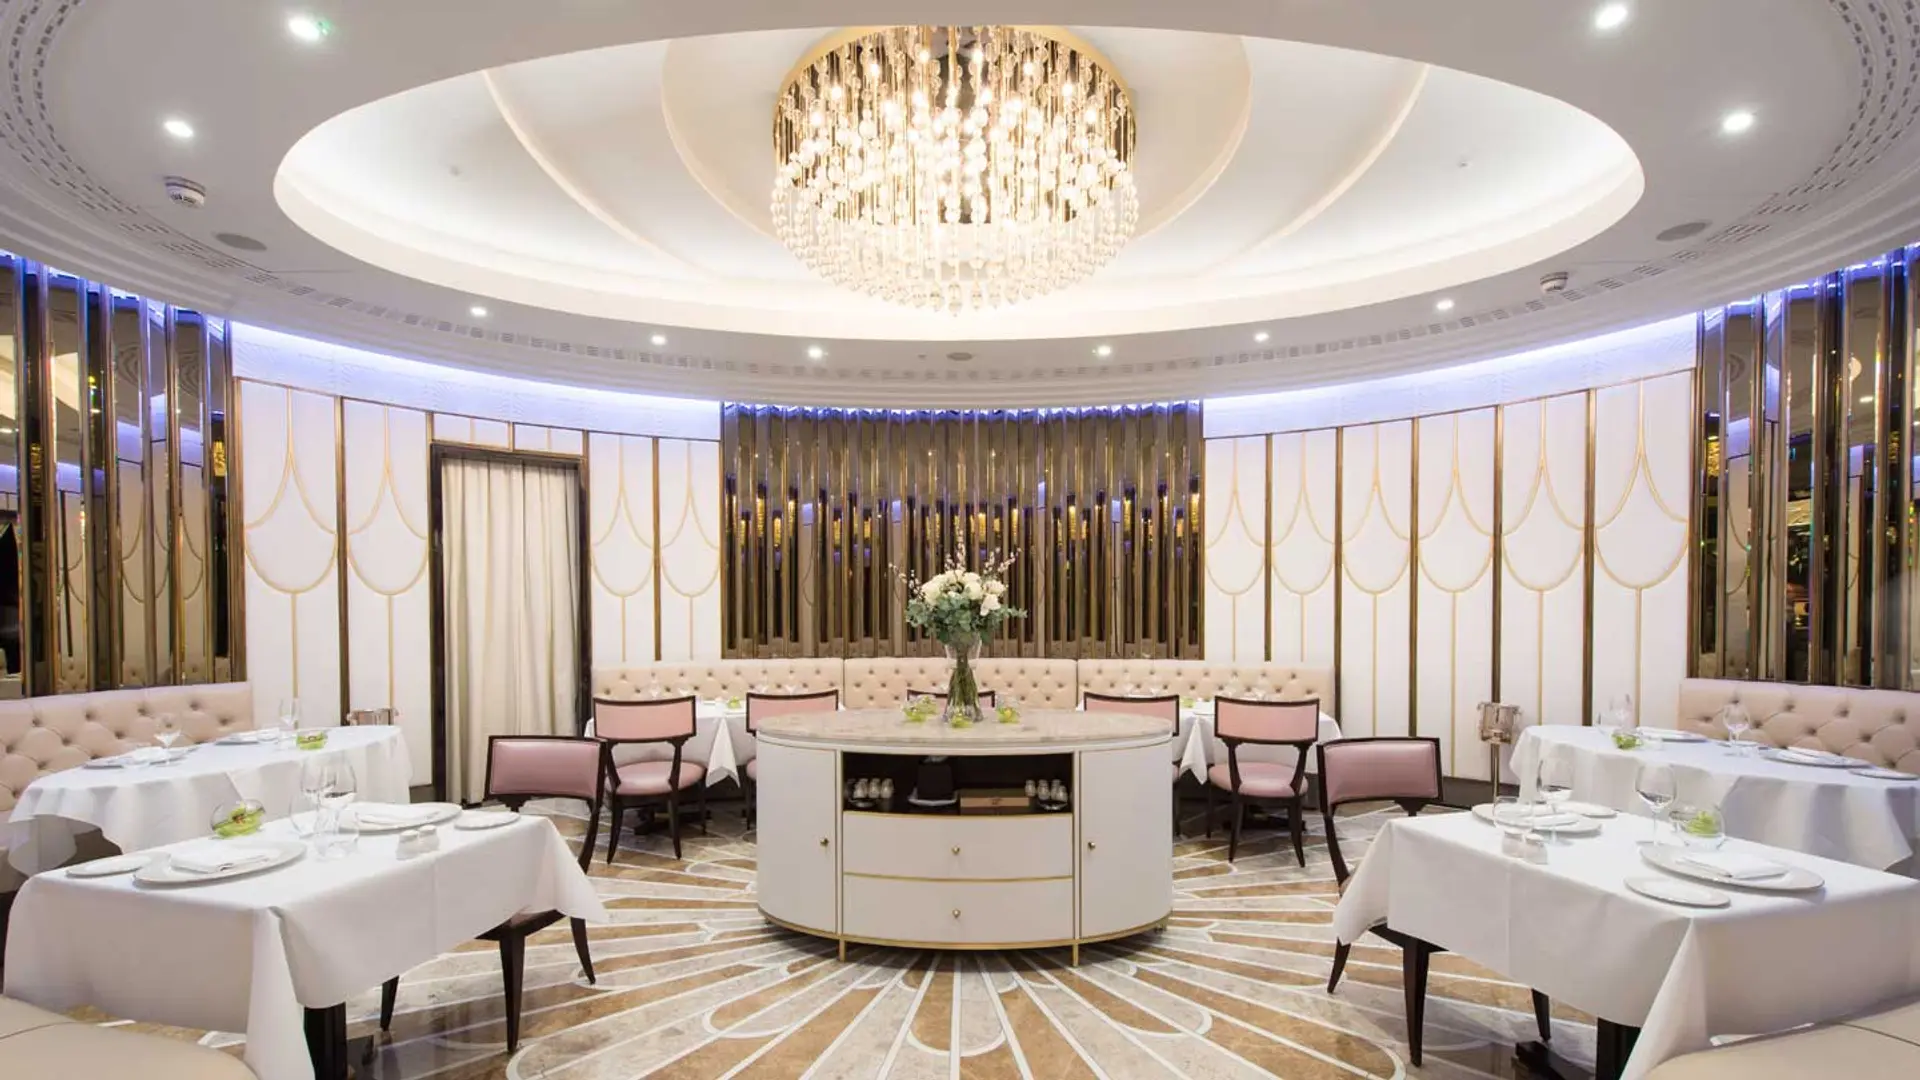 Hotel review Restaurants & Bars' - The Wellesley - 0